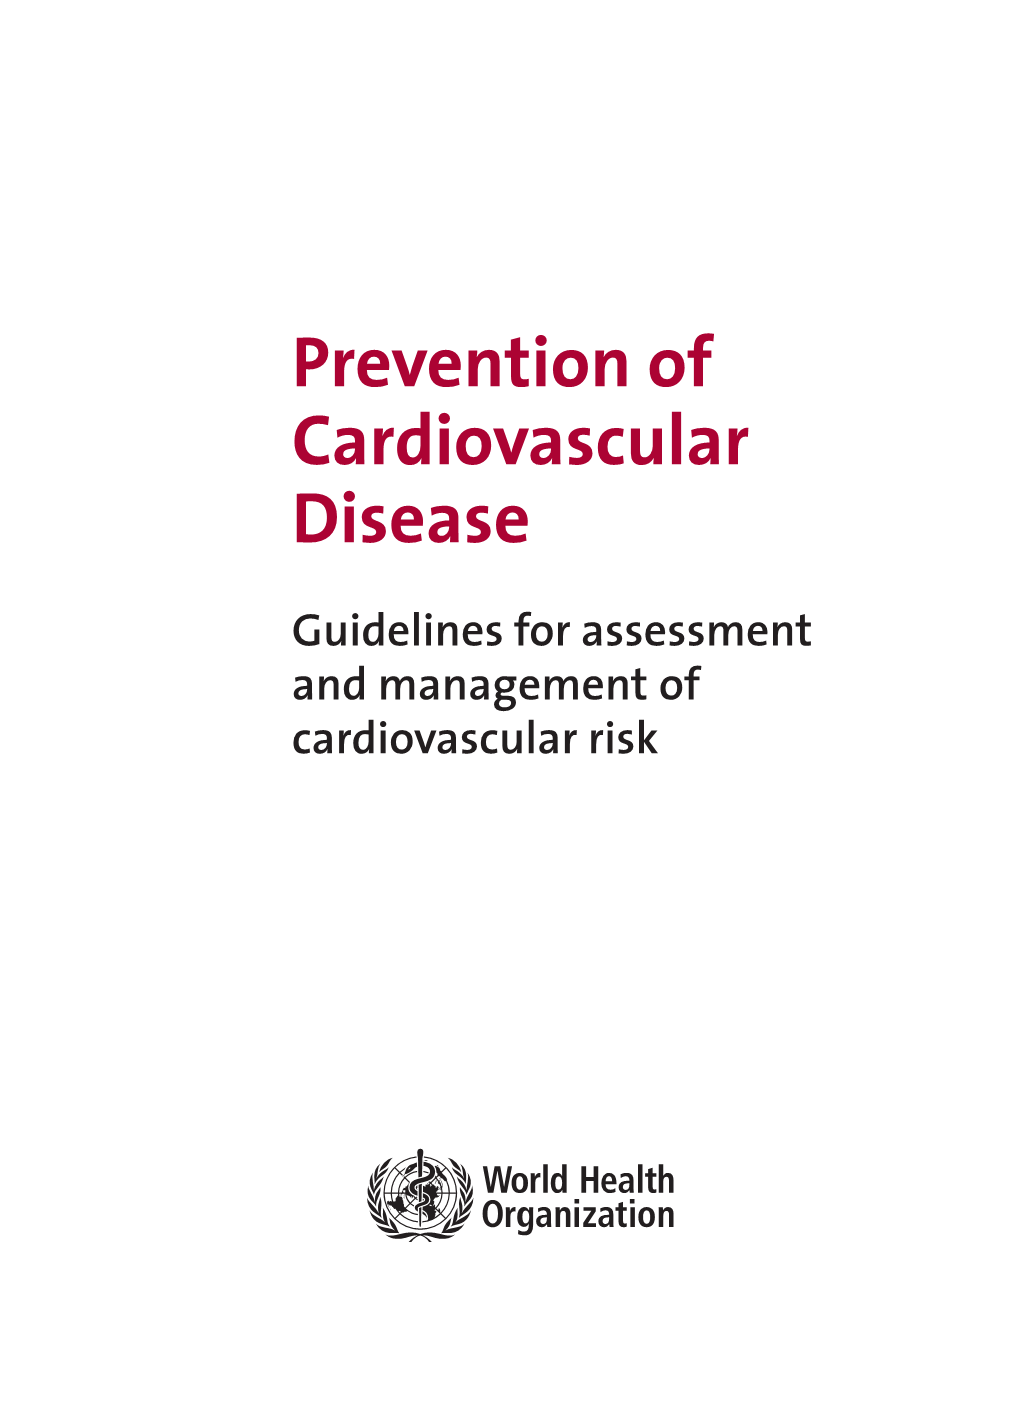 World Health Organization. Prevention of Cardiovascular Disease